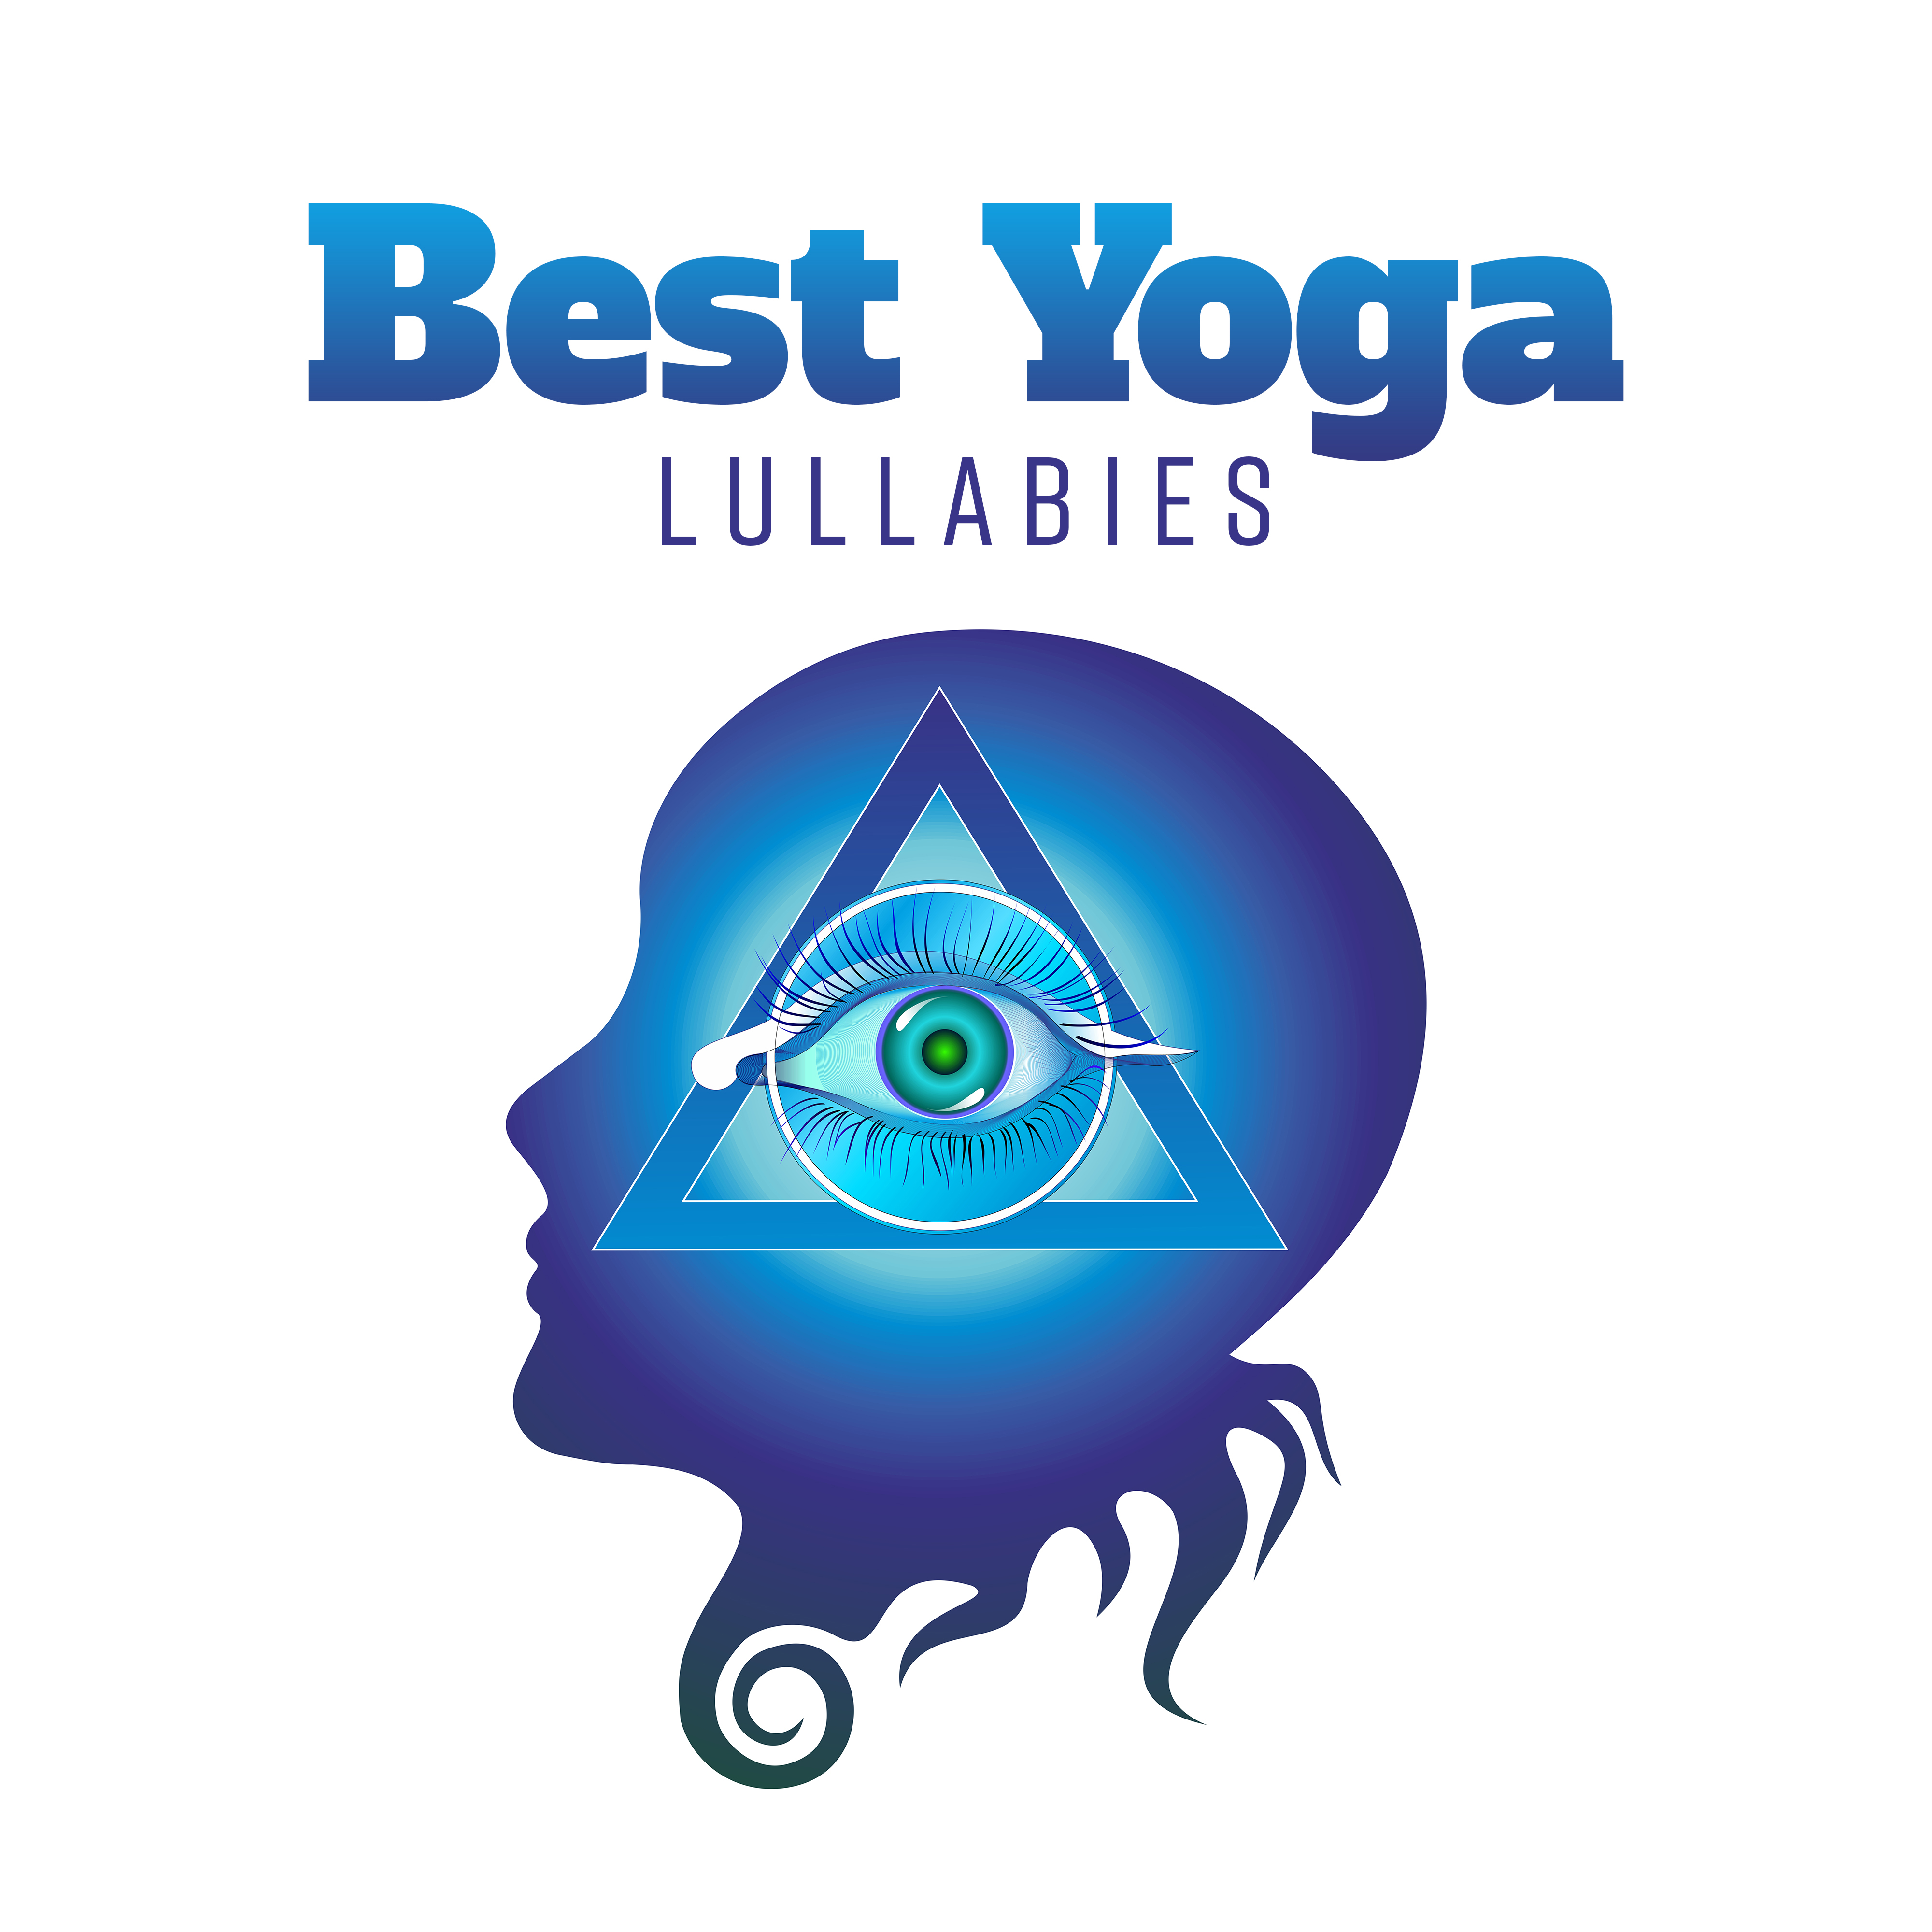 Best Yoga Lullabies